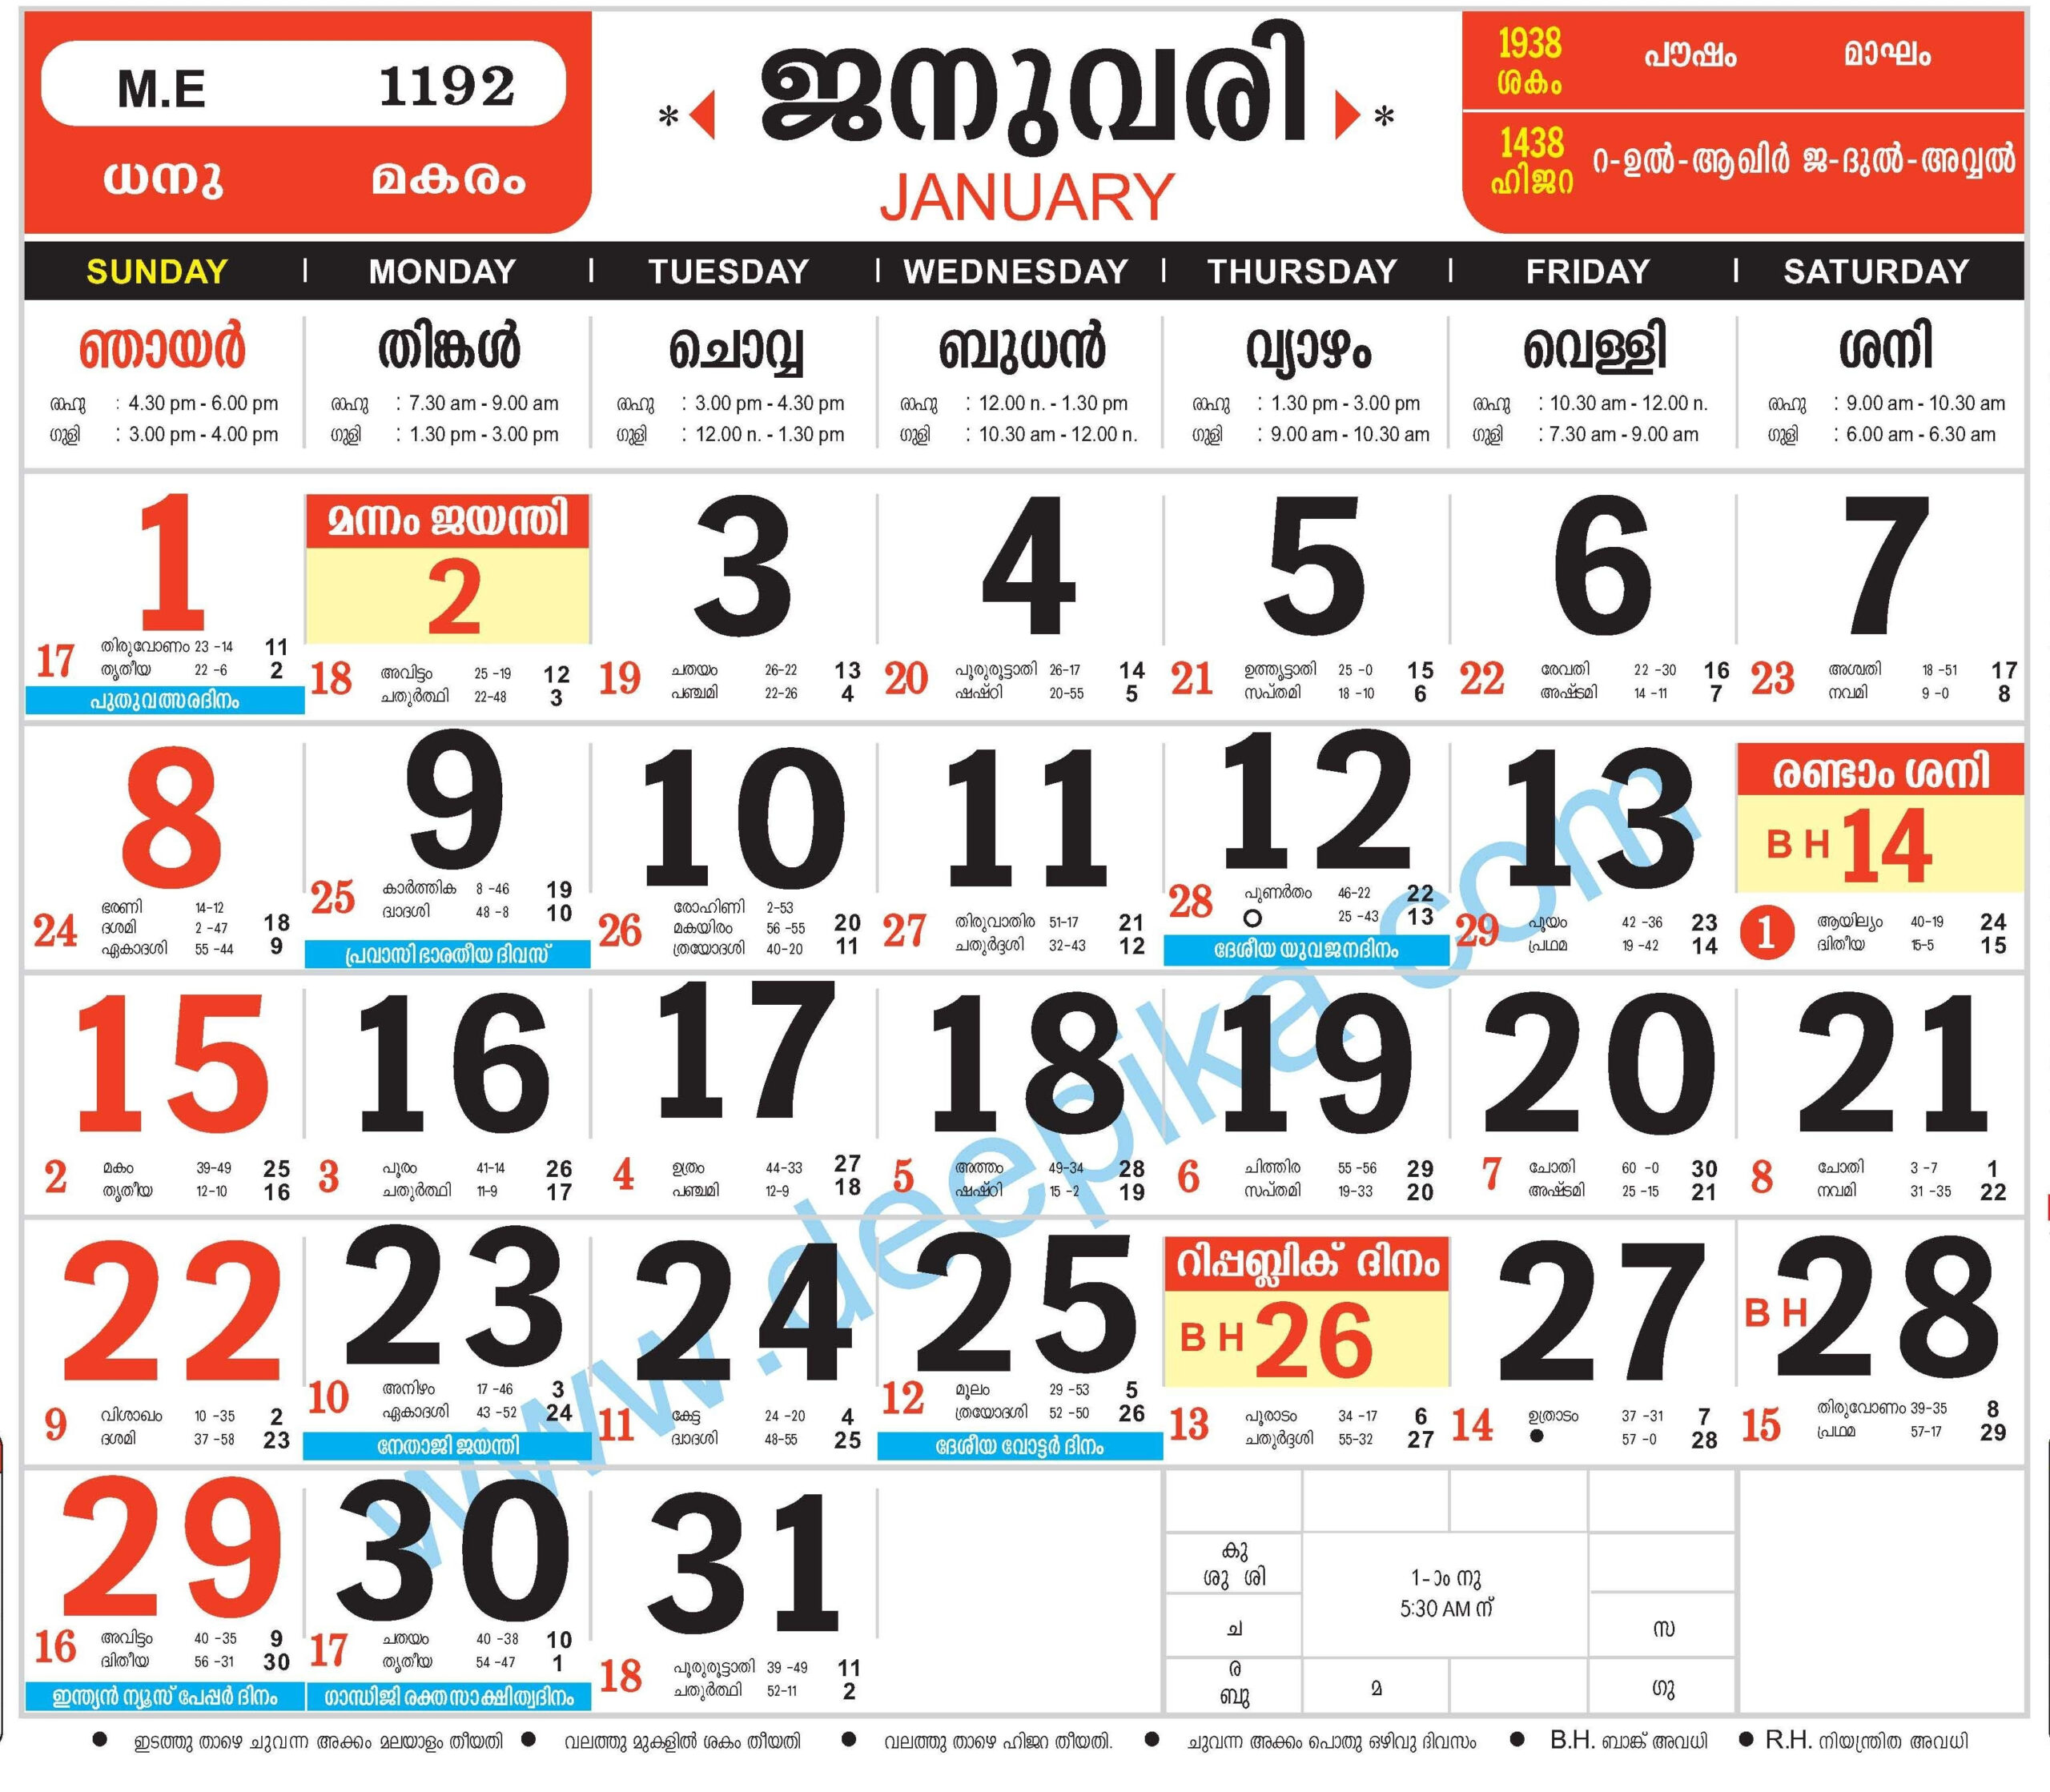 Malayala Manorama Calendar 2020 November  June 2019 intended for Malayala Manorama Calendar